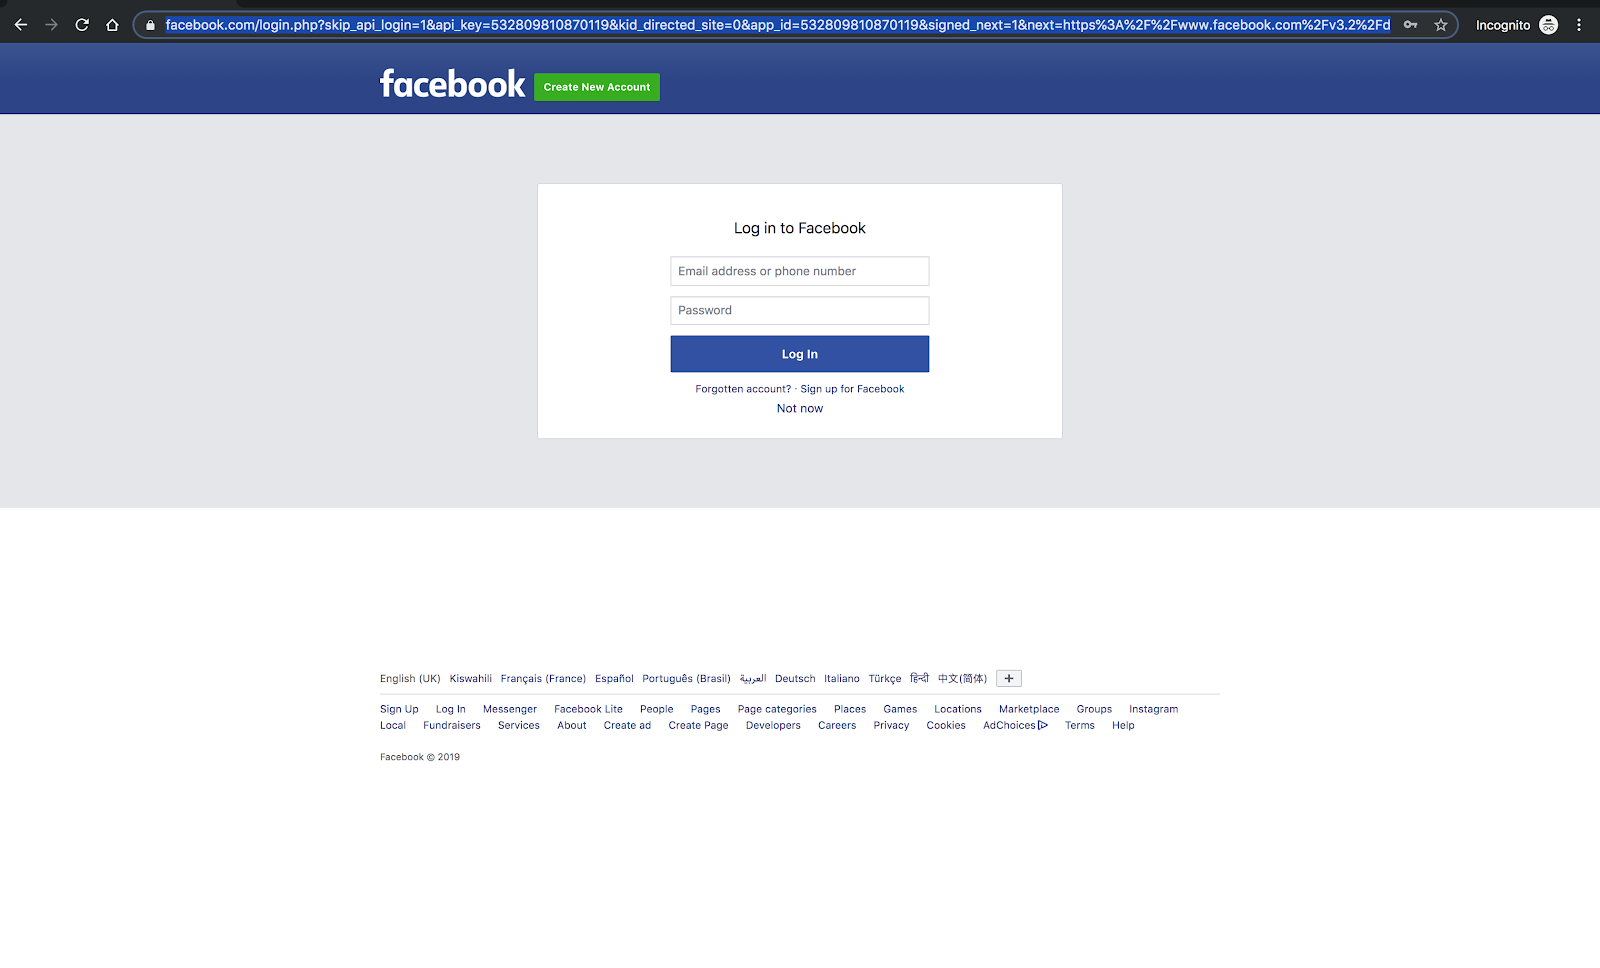 Facebook OAuth screen